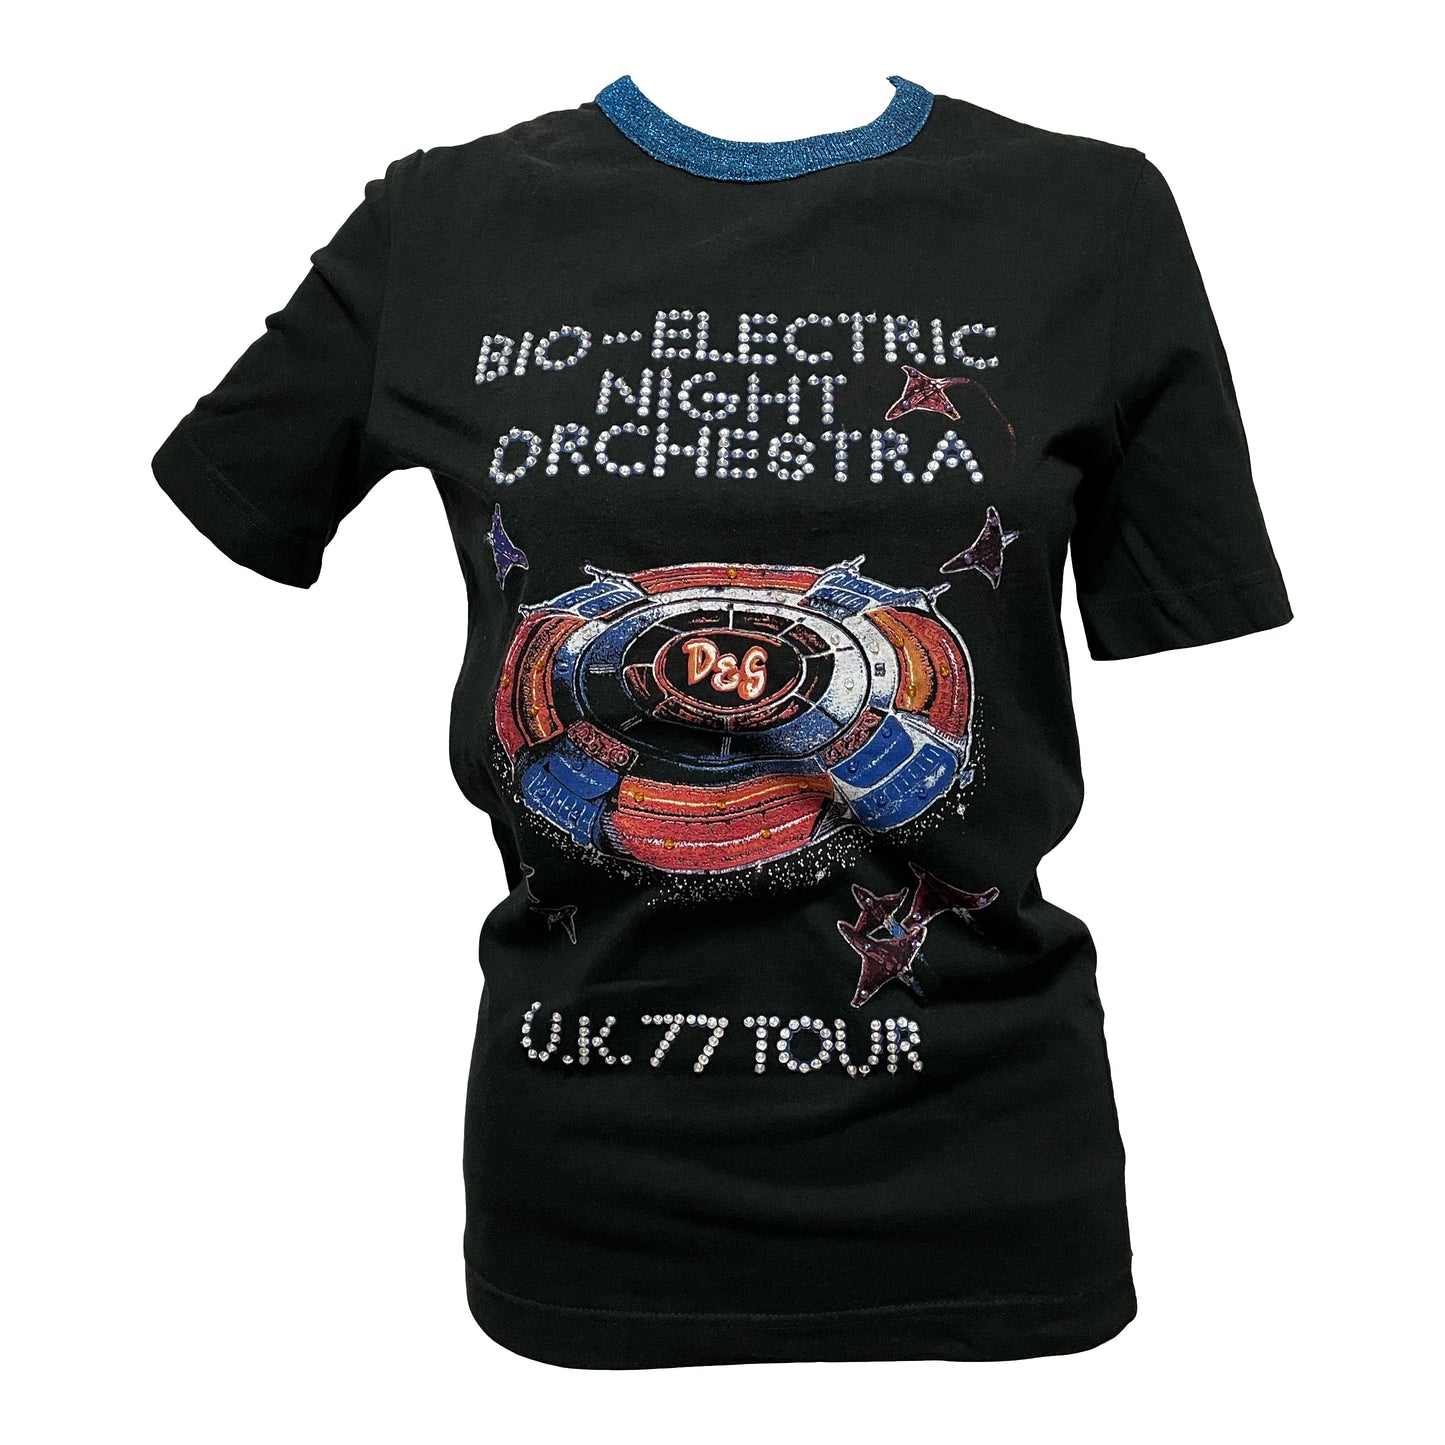 D&G Bio-Electric Night Orchestra T-Shirt